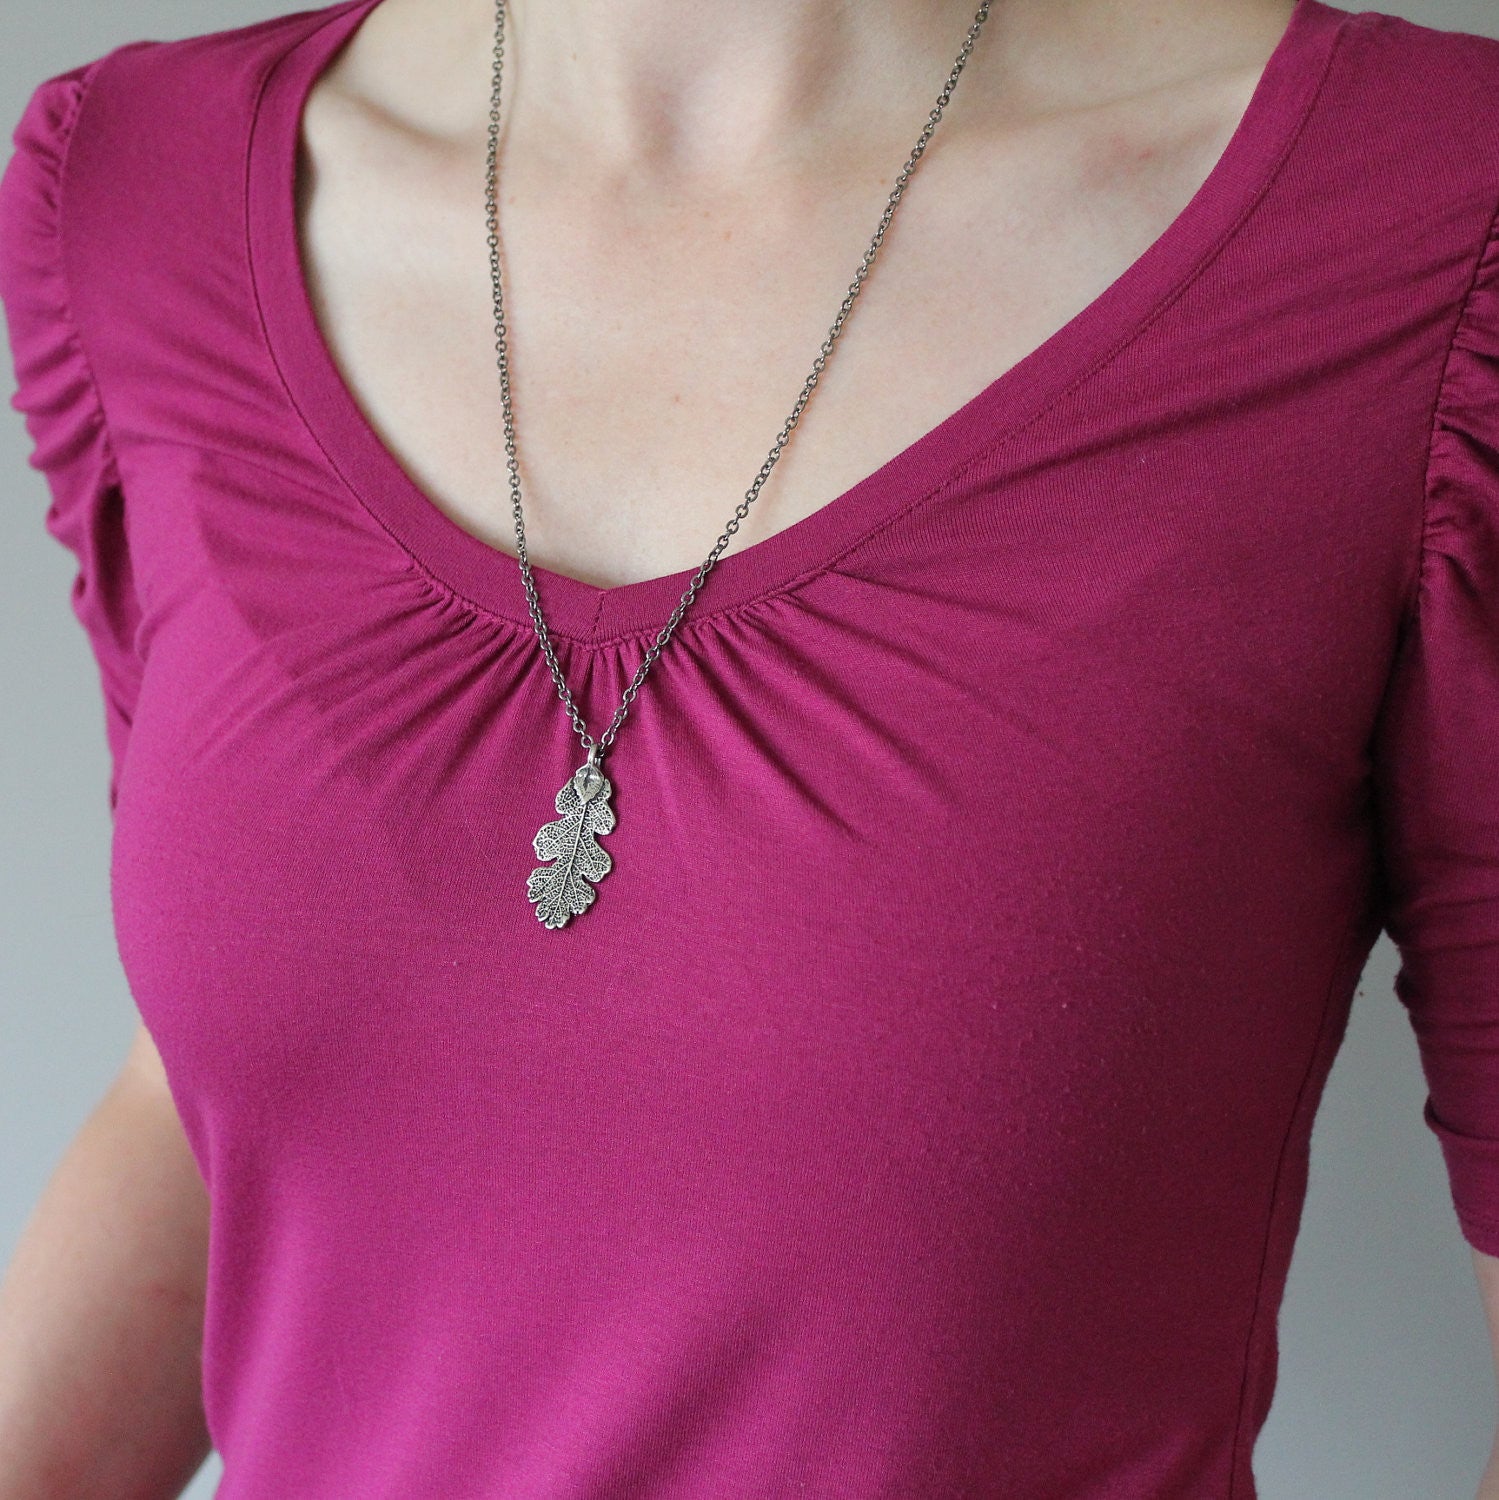 Oak Leaf Necklace - Gwen Delicious Jewelry Designs